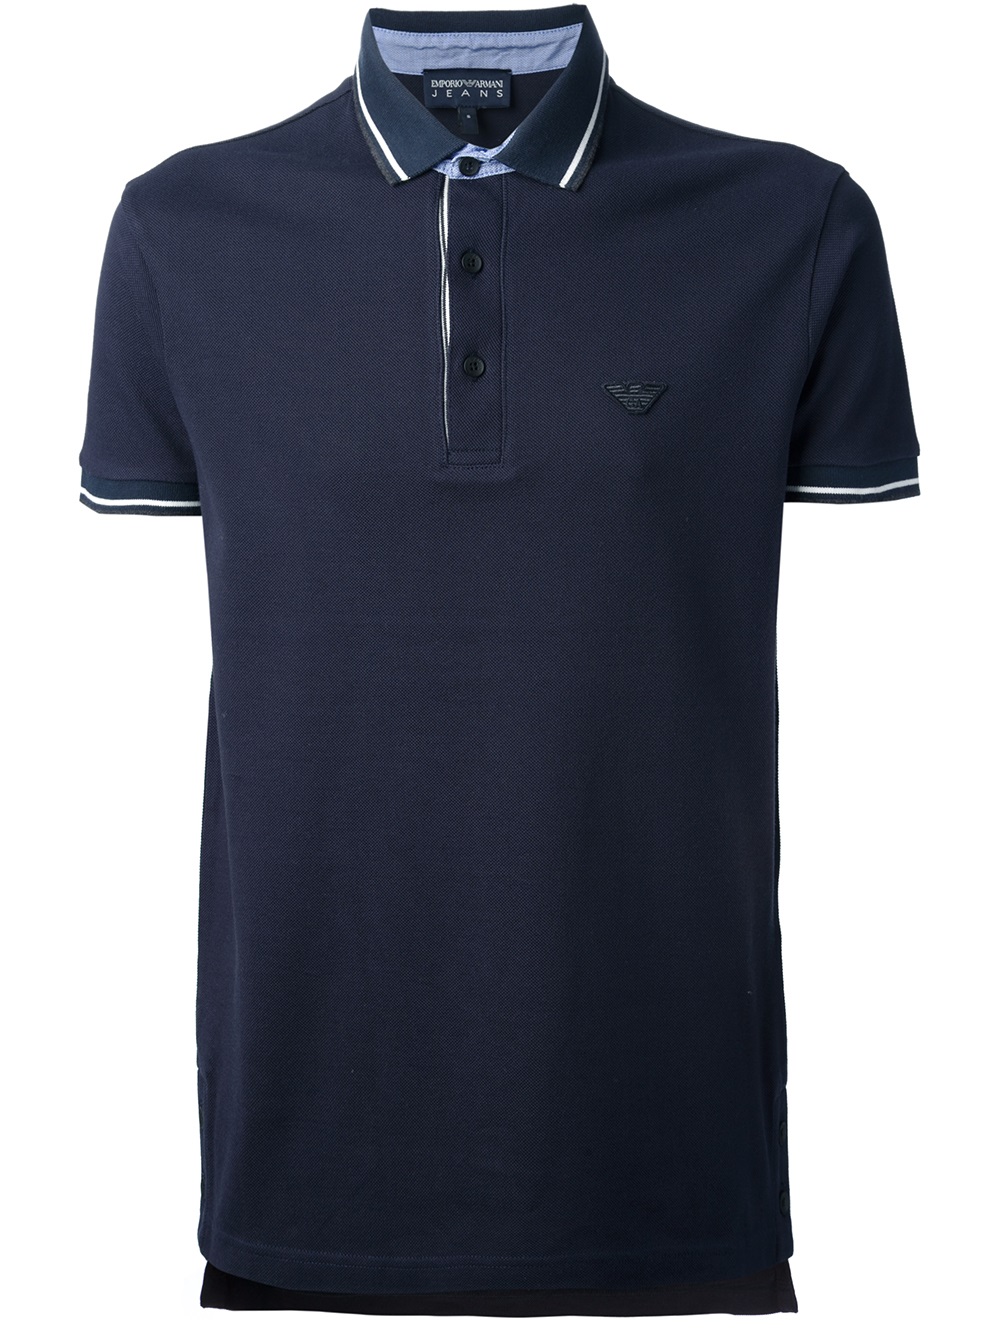 Lyst - Emporio Armani Contrast Trim Polo Shirt in Blue for Men